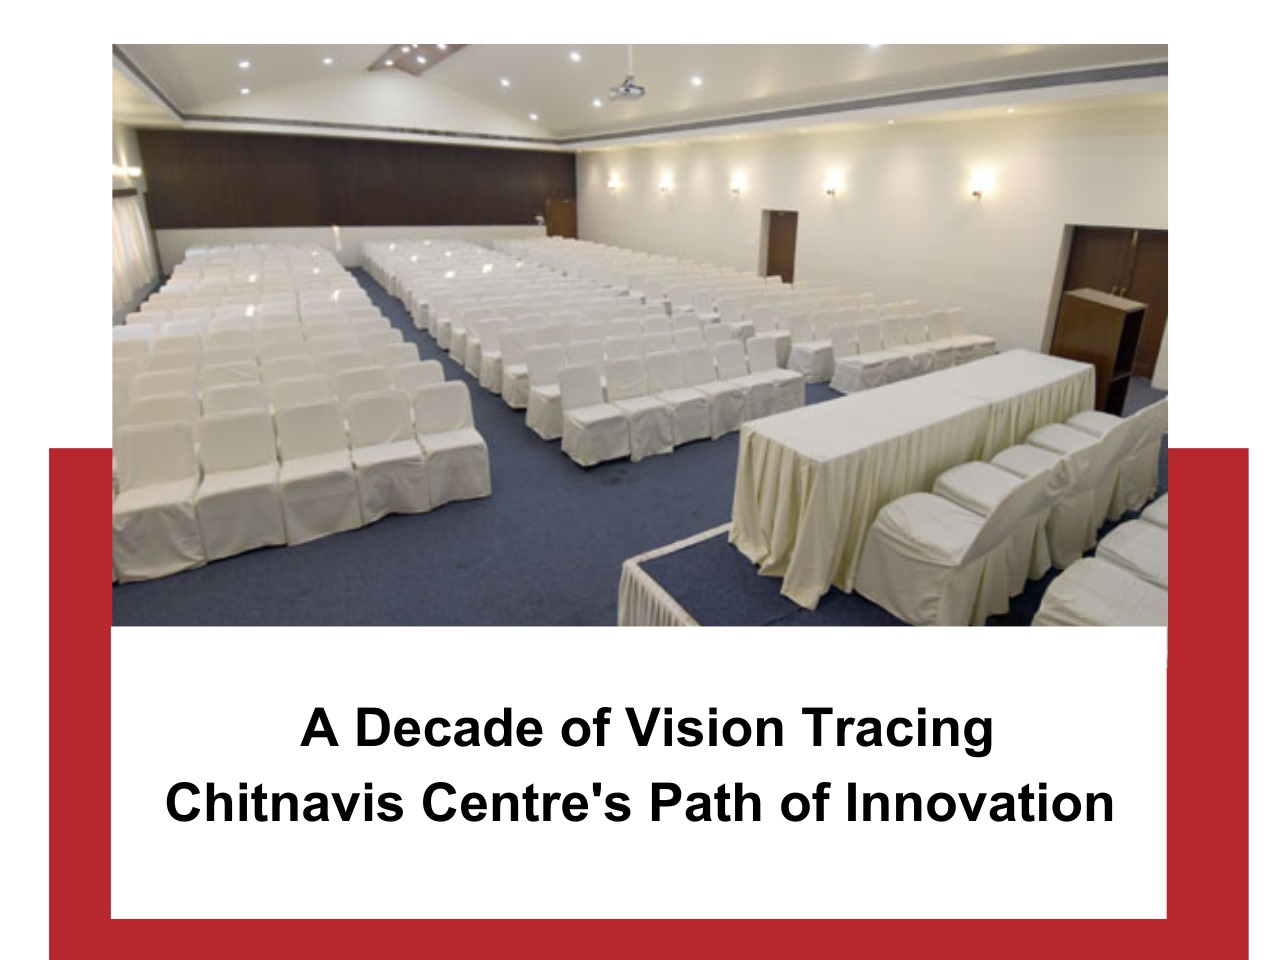 Chitnavis Centre's Path of Innovation